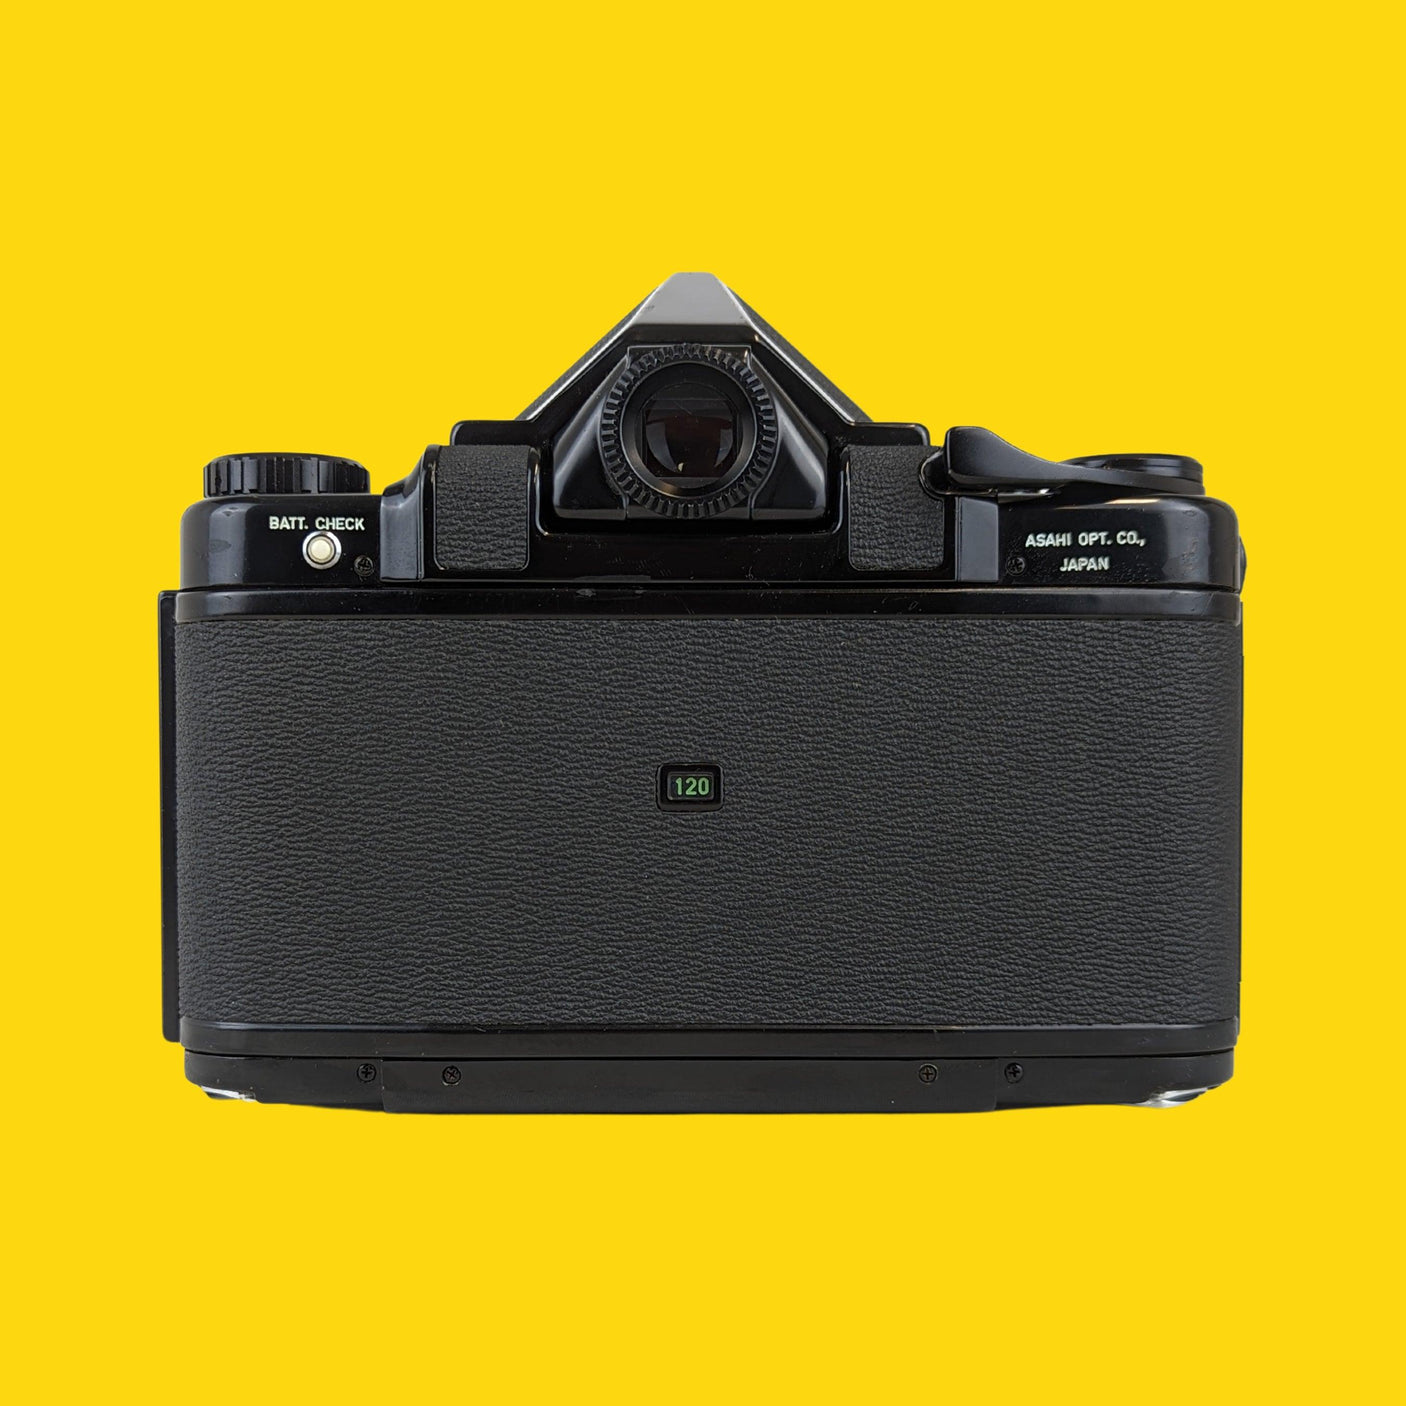 Asahi Pentax 67 MLU With 105mm F2.4 Takumar lens. 6X7 Medium Format Film Camera